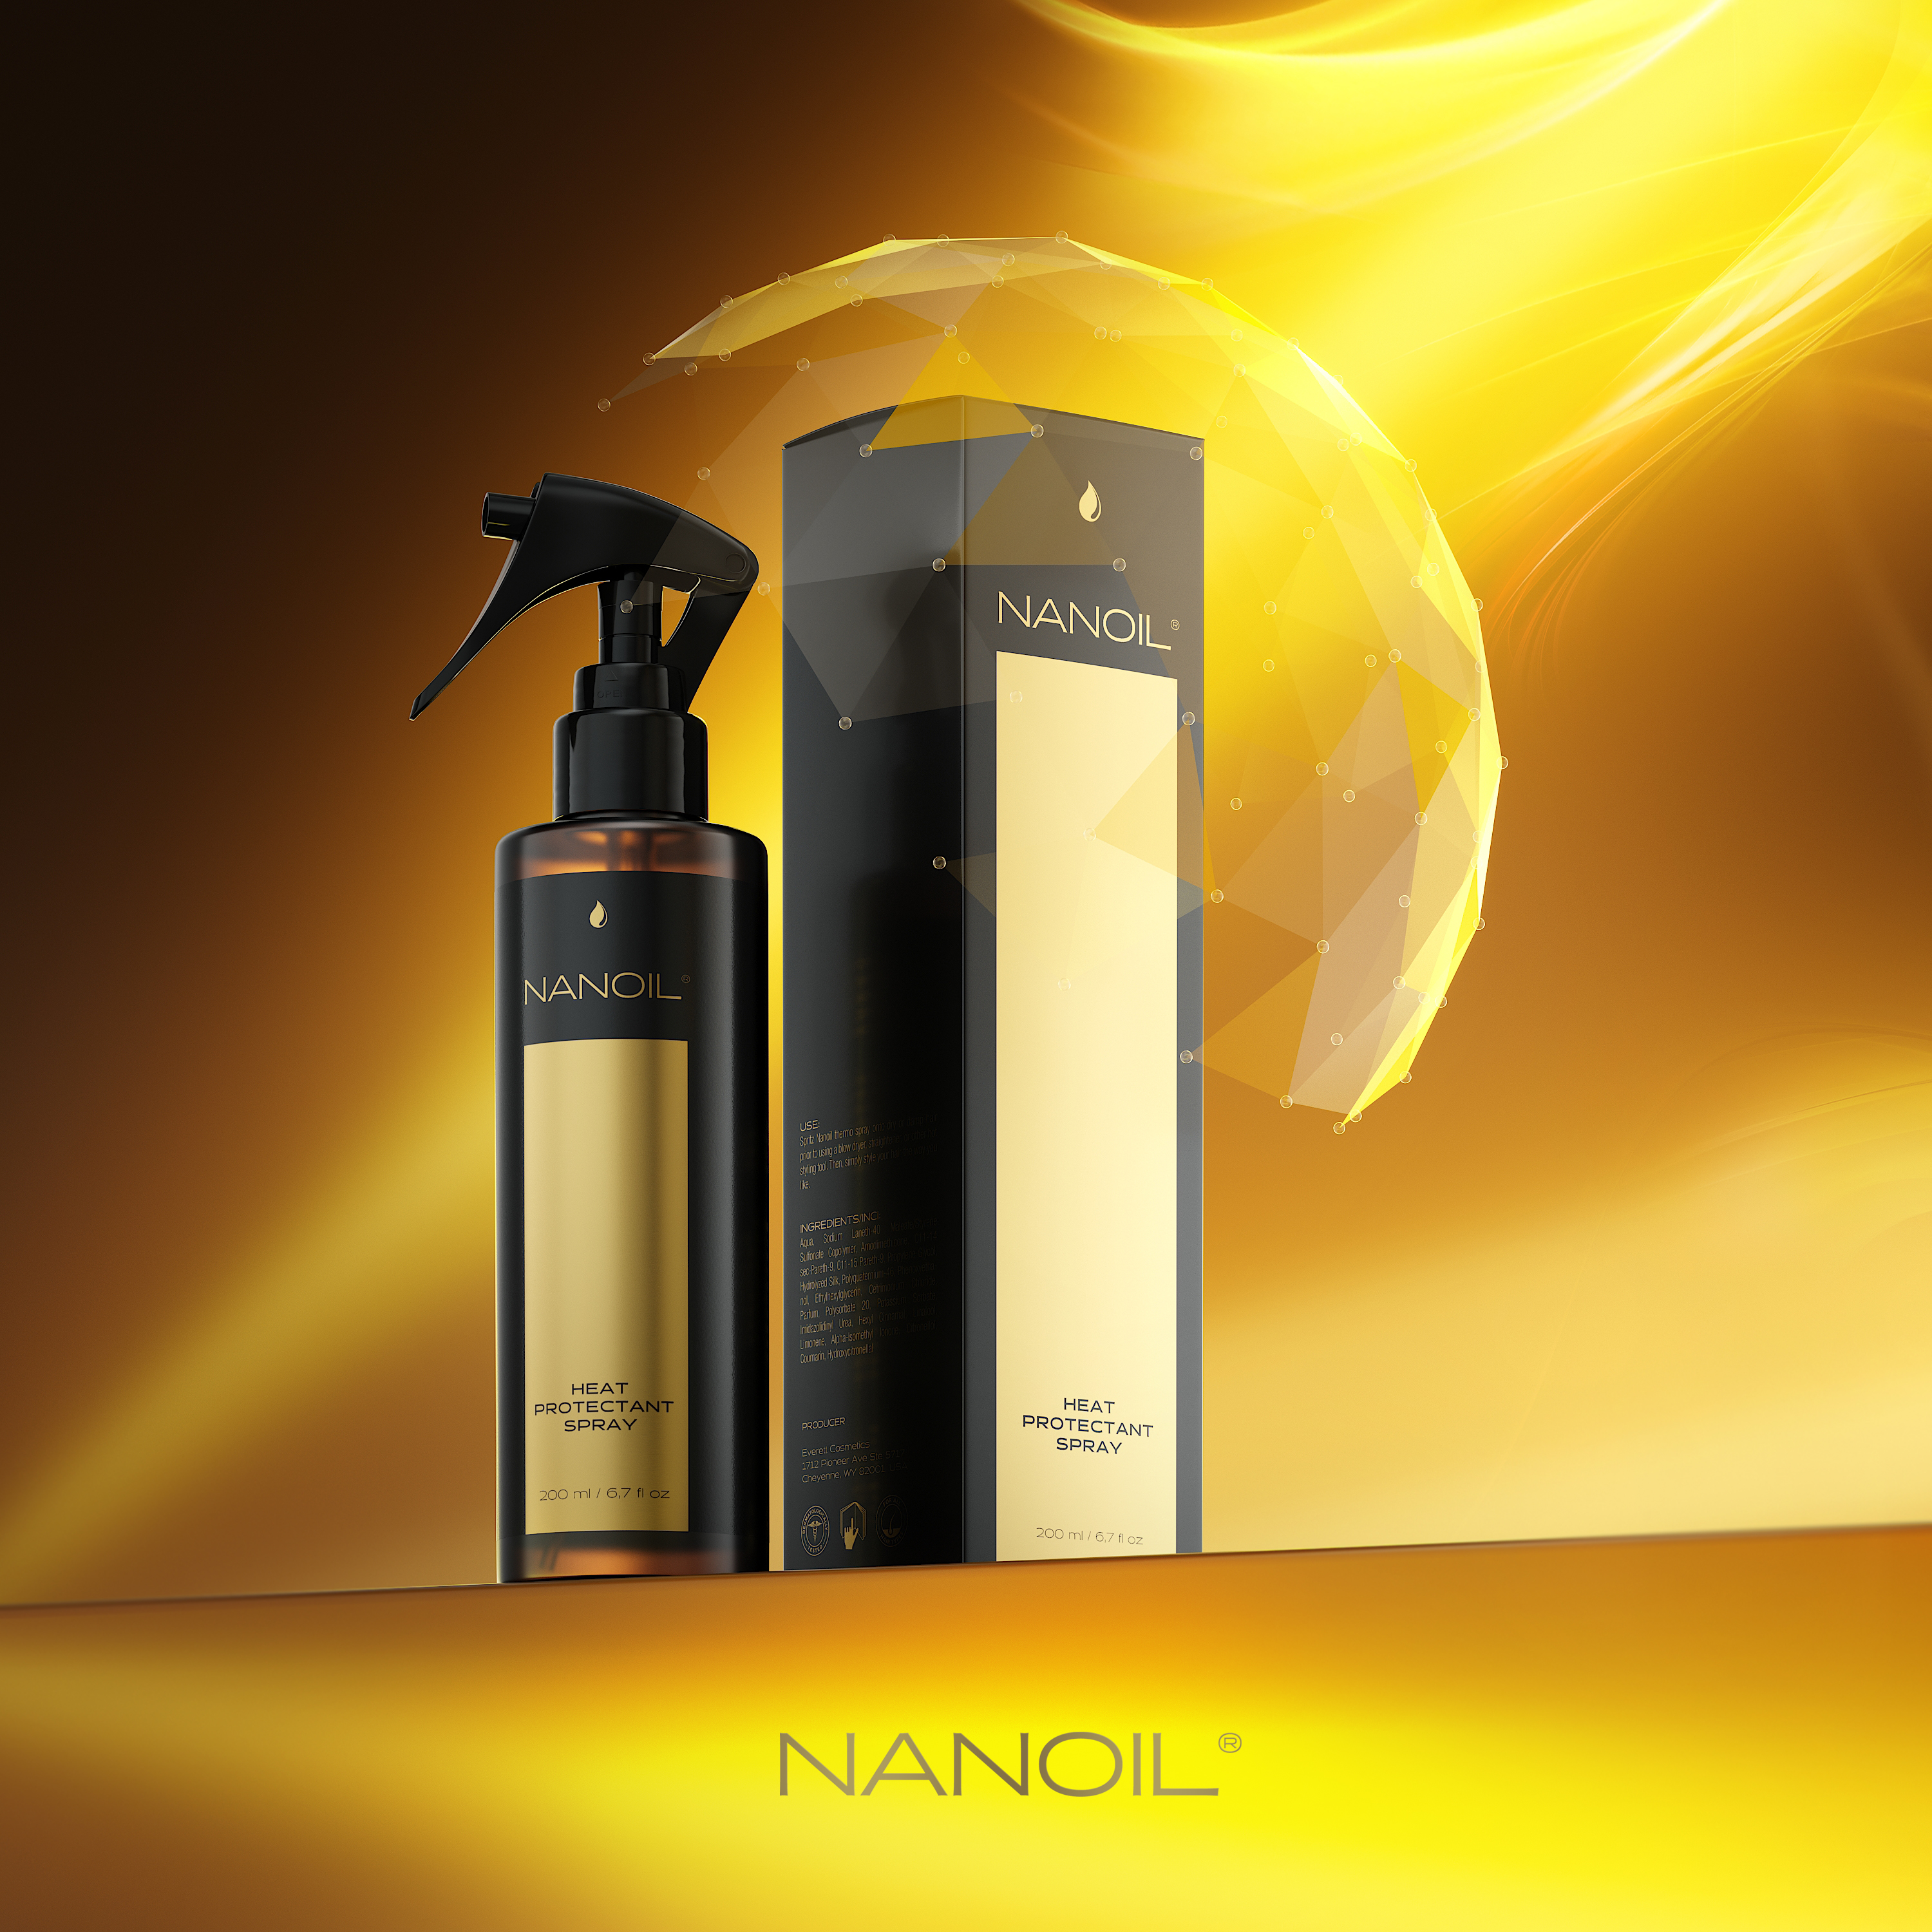 Nanoil best heat procetant spray